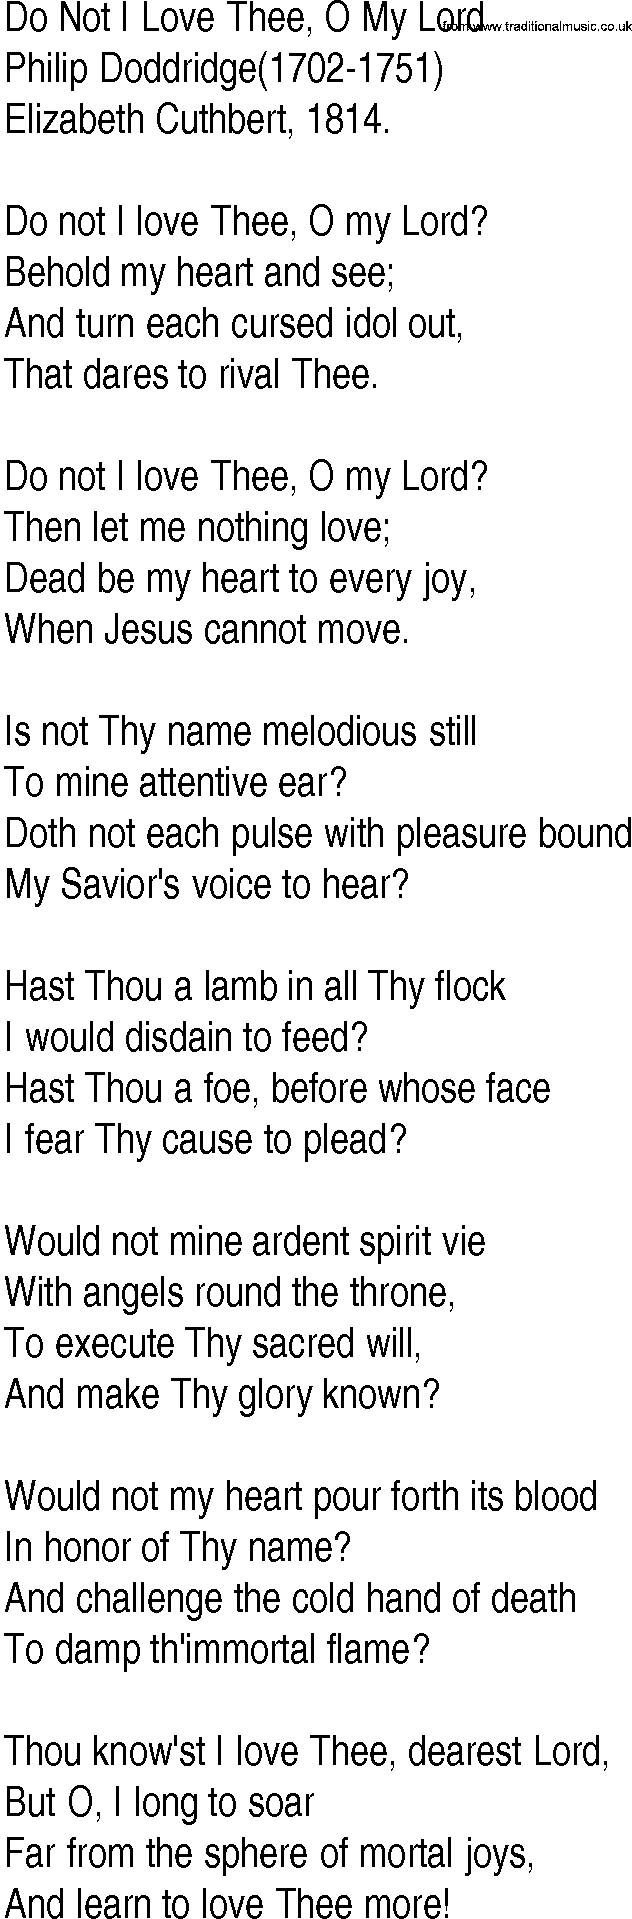 Hymn and Gospel Song: Do Not I Love Thee, O My Lord by Philip Doddridge lyrics